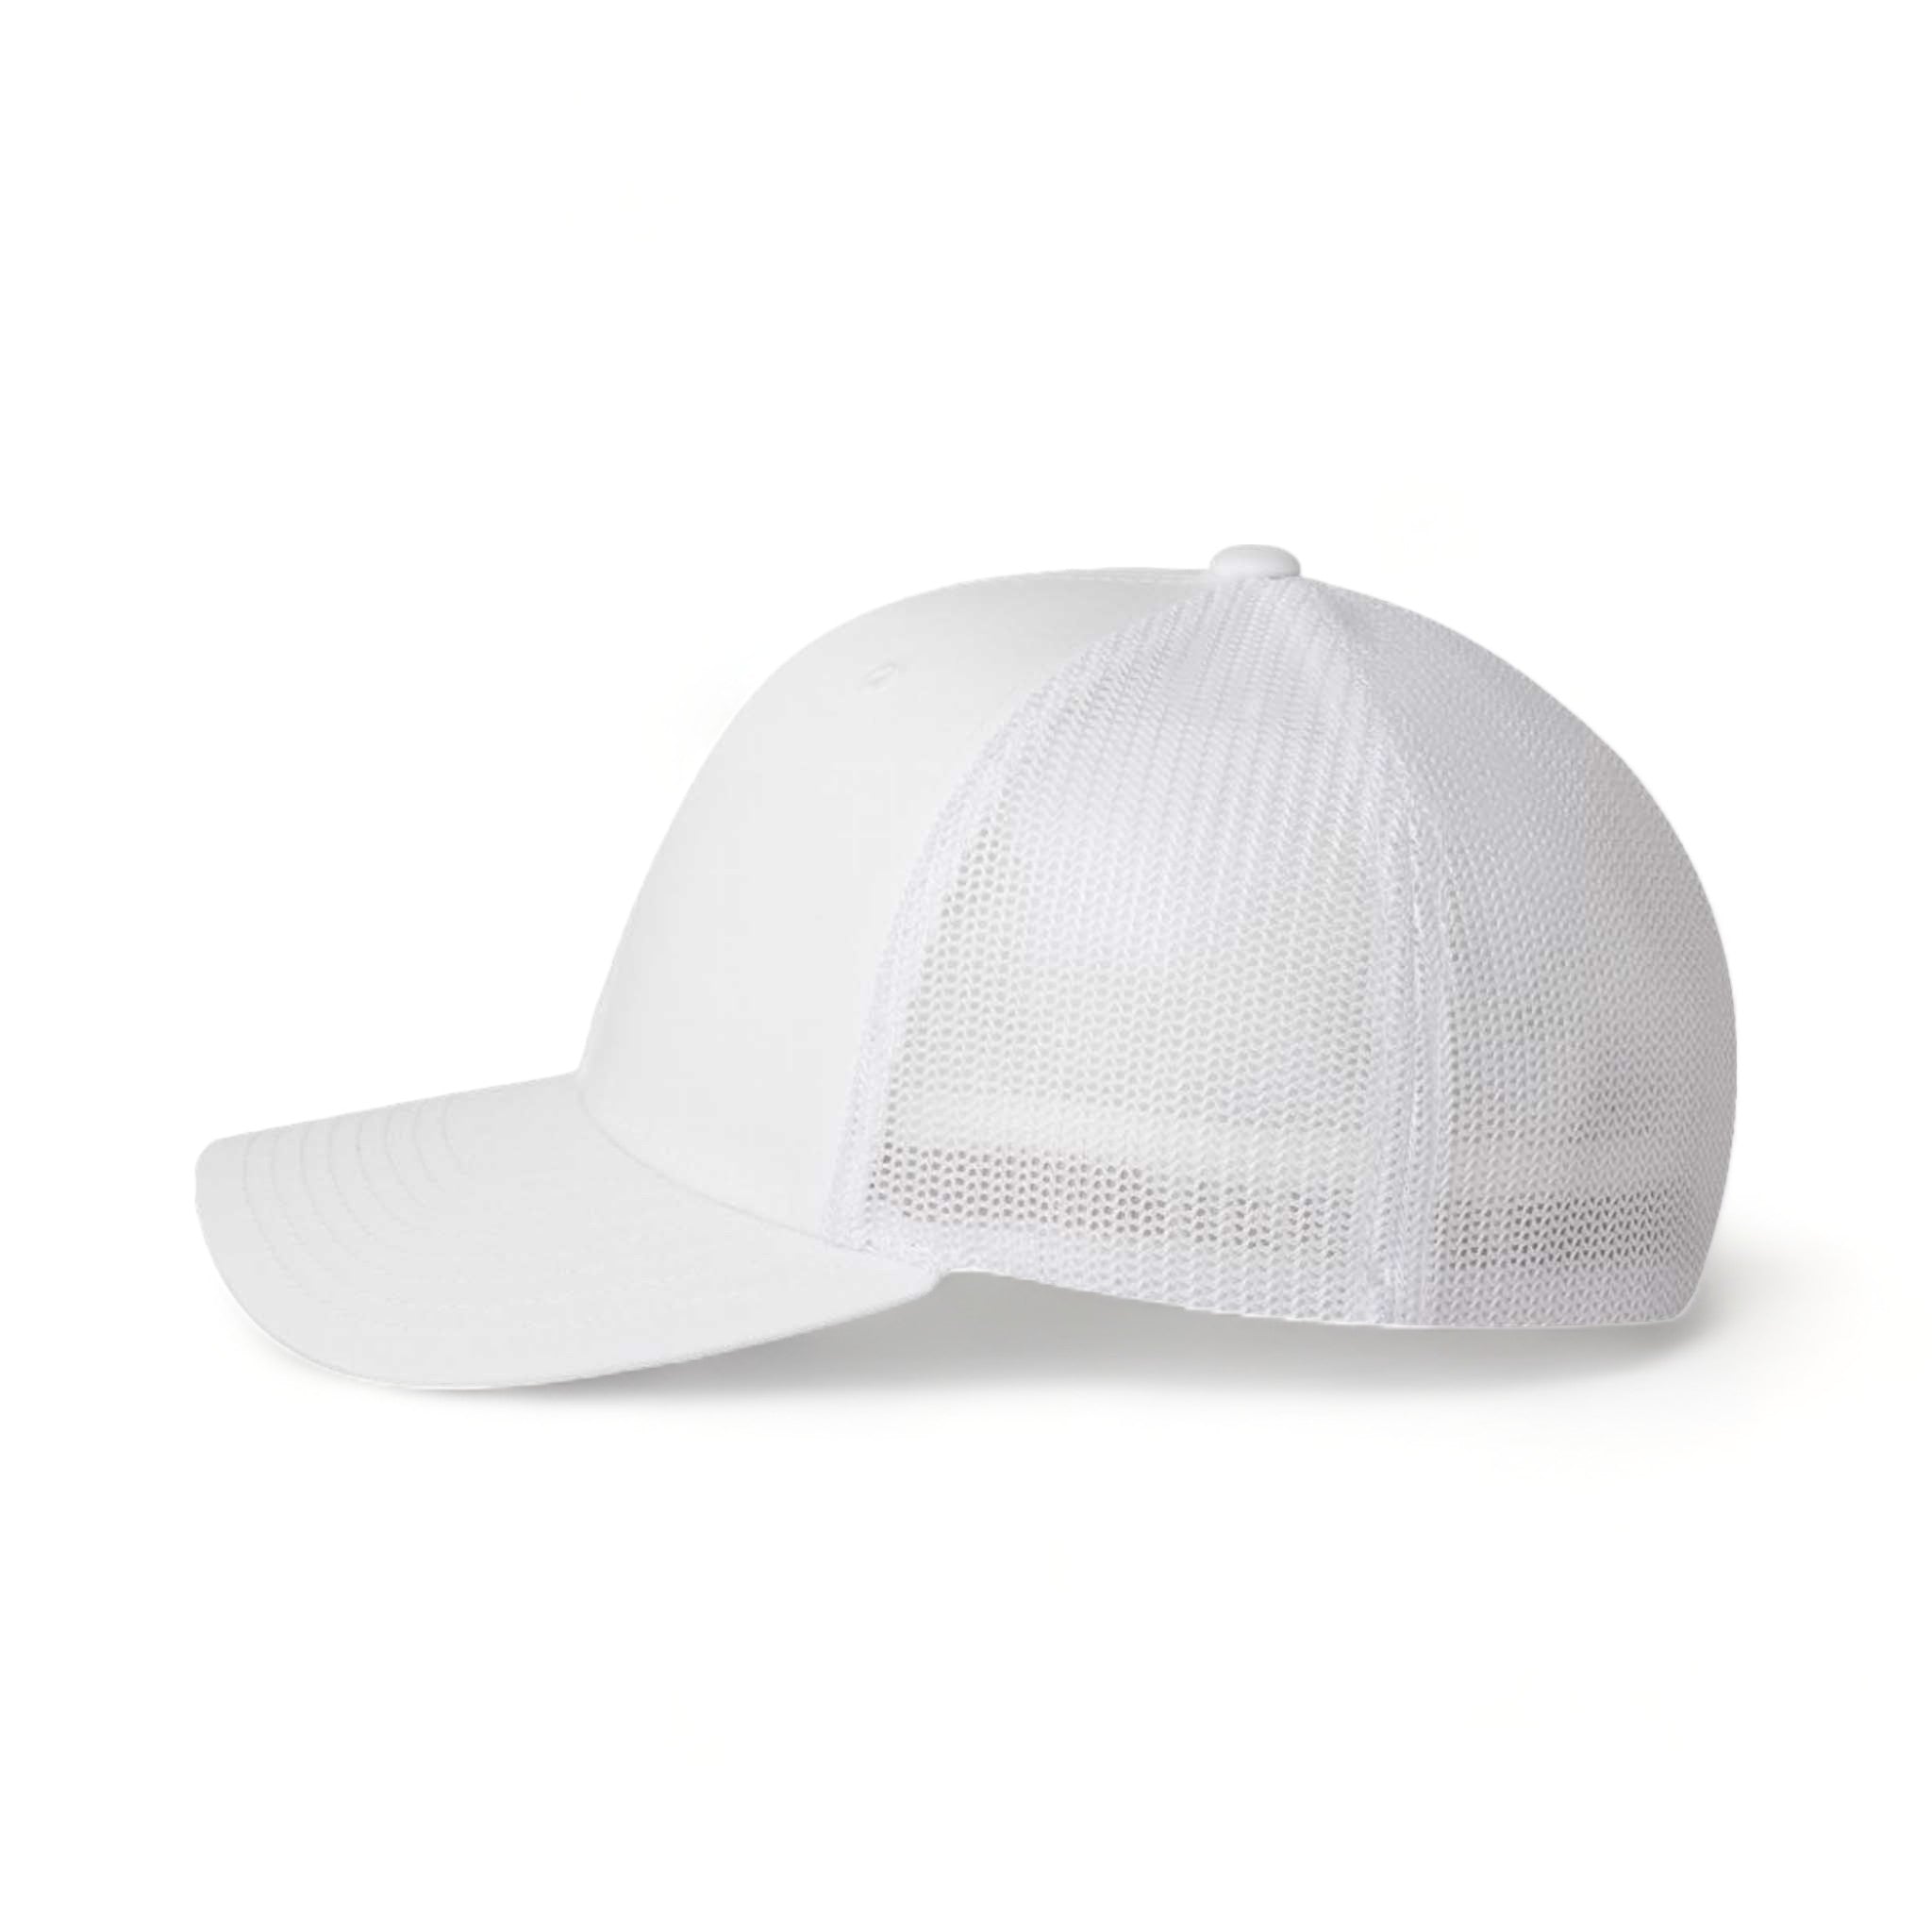 Side view of Flexfit 6511 custom hat in white